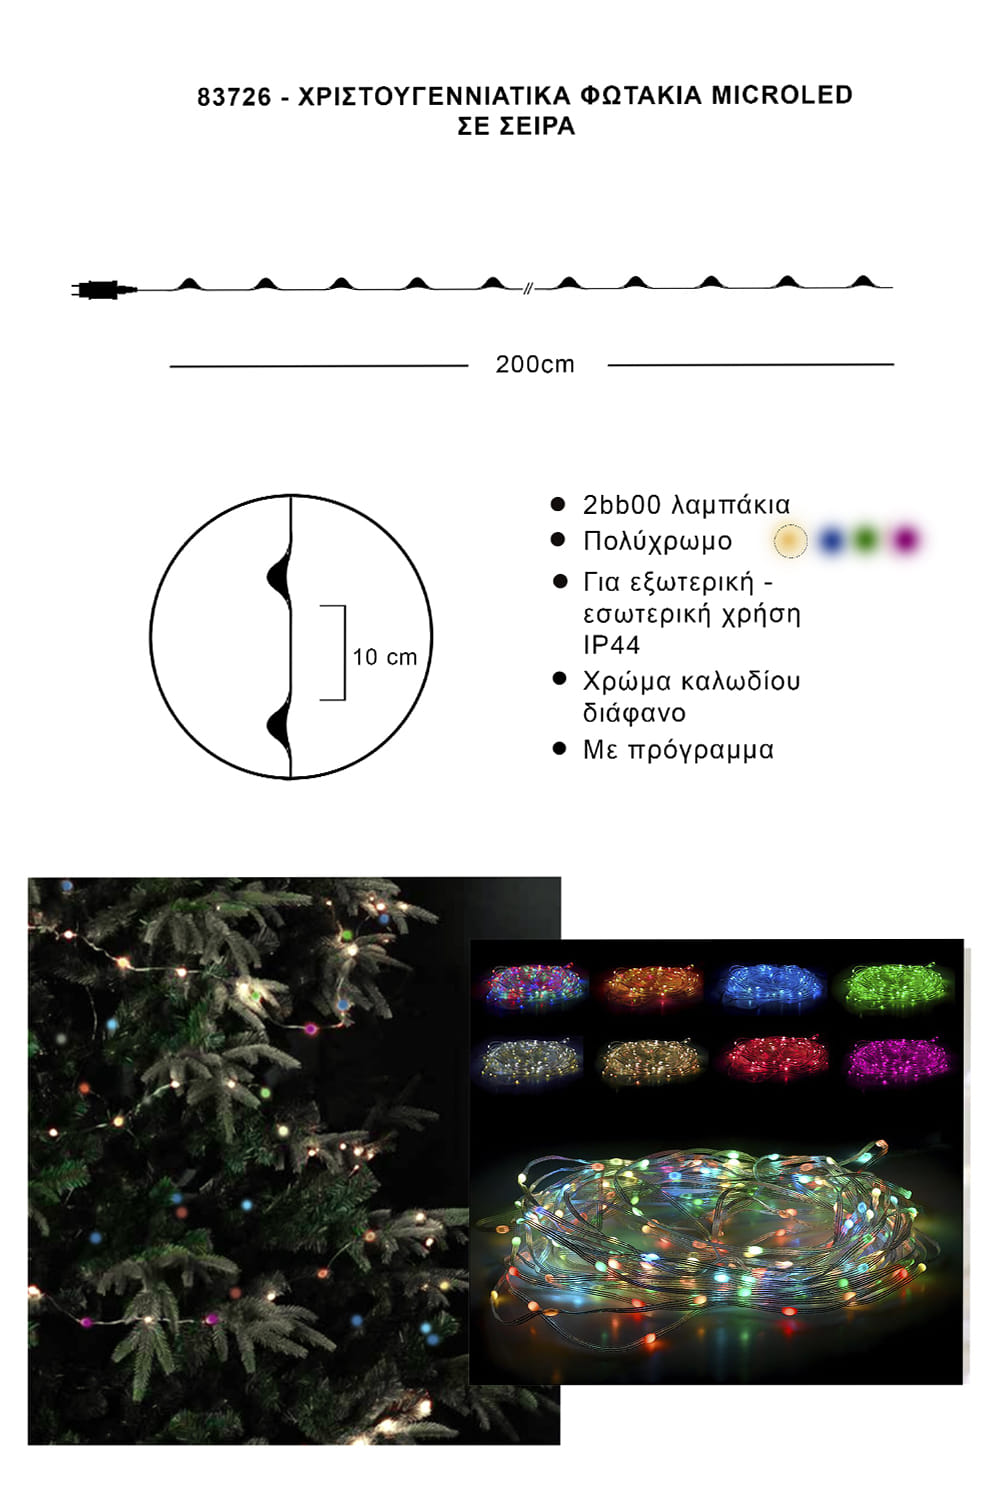 Athome Pavloudakis - Χριστουγεννιάτικα φωτάκια σε σειρά 200 Microled εναλλαγή χρωμάτων